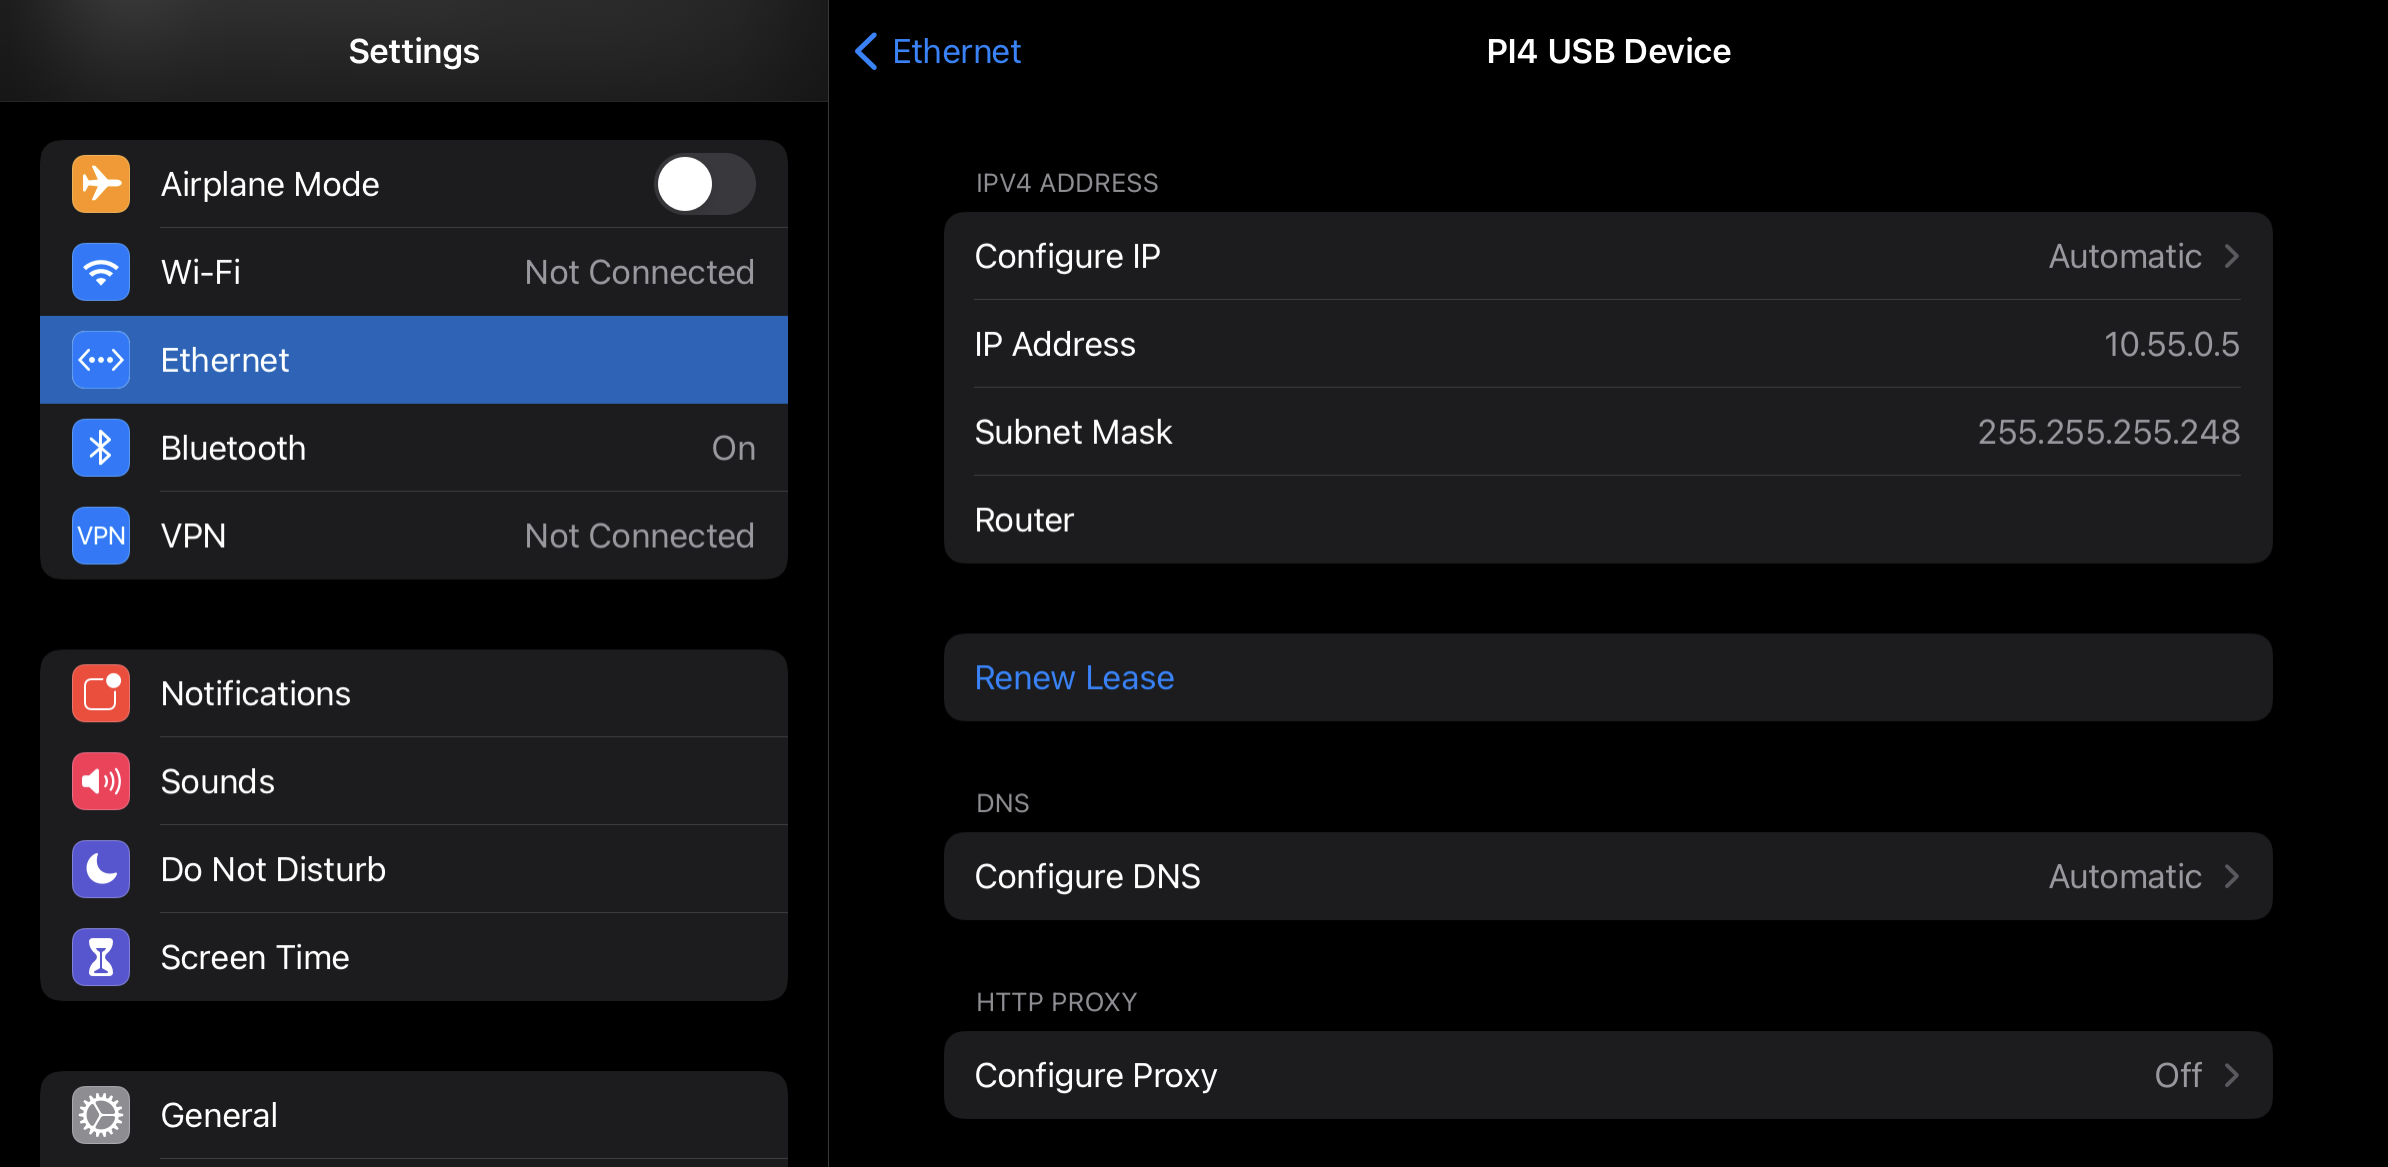 iPad settings network interface